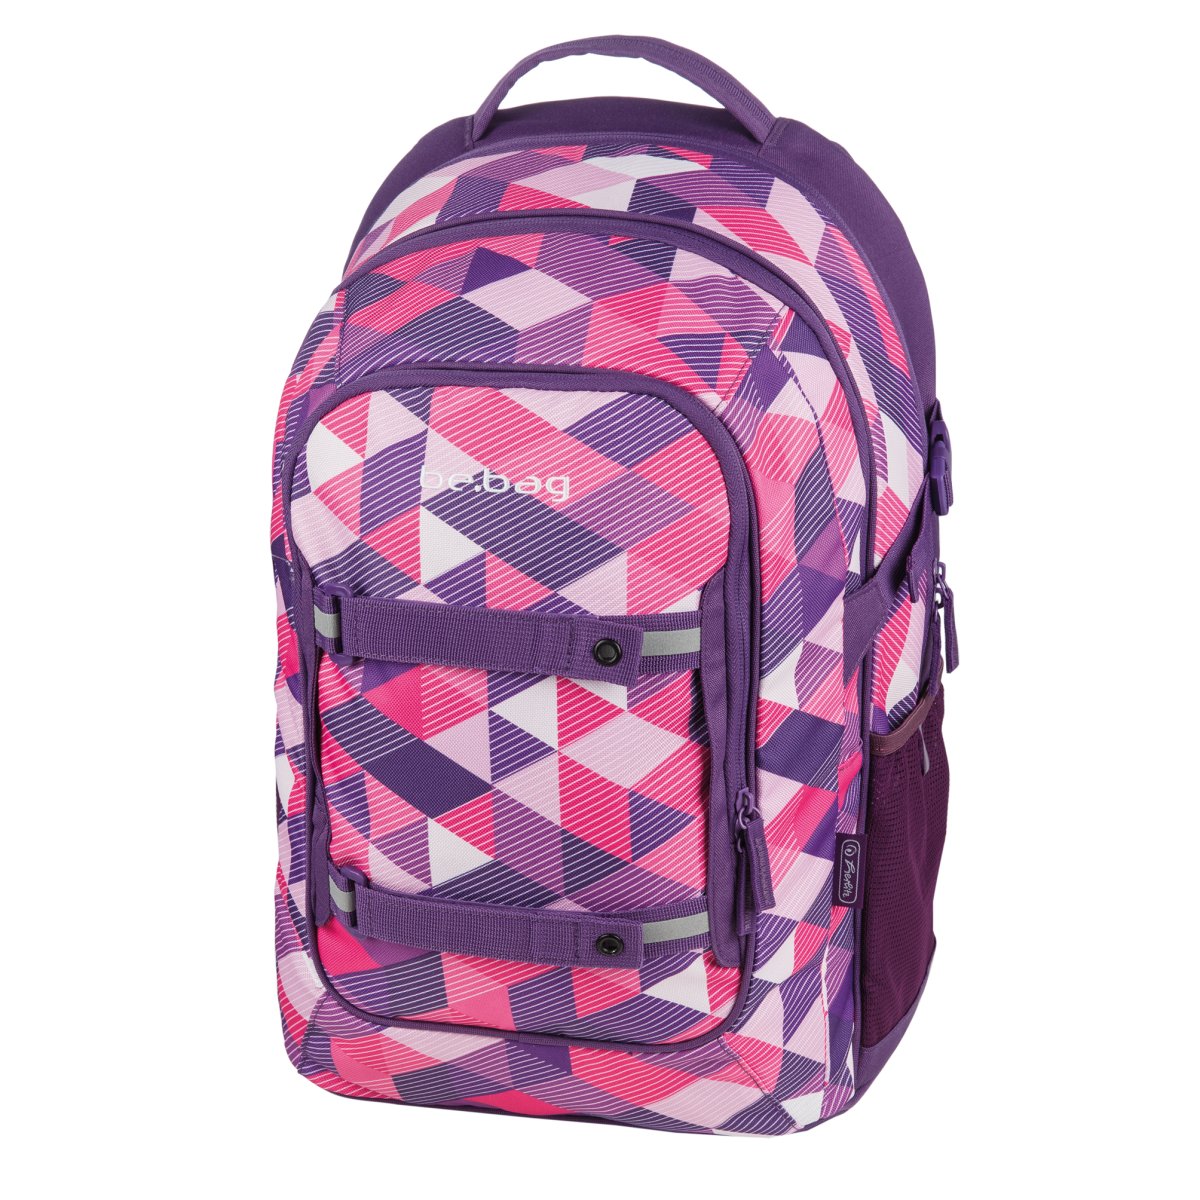 school backpack be.bag beat Purple Checked - Herlitz